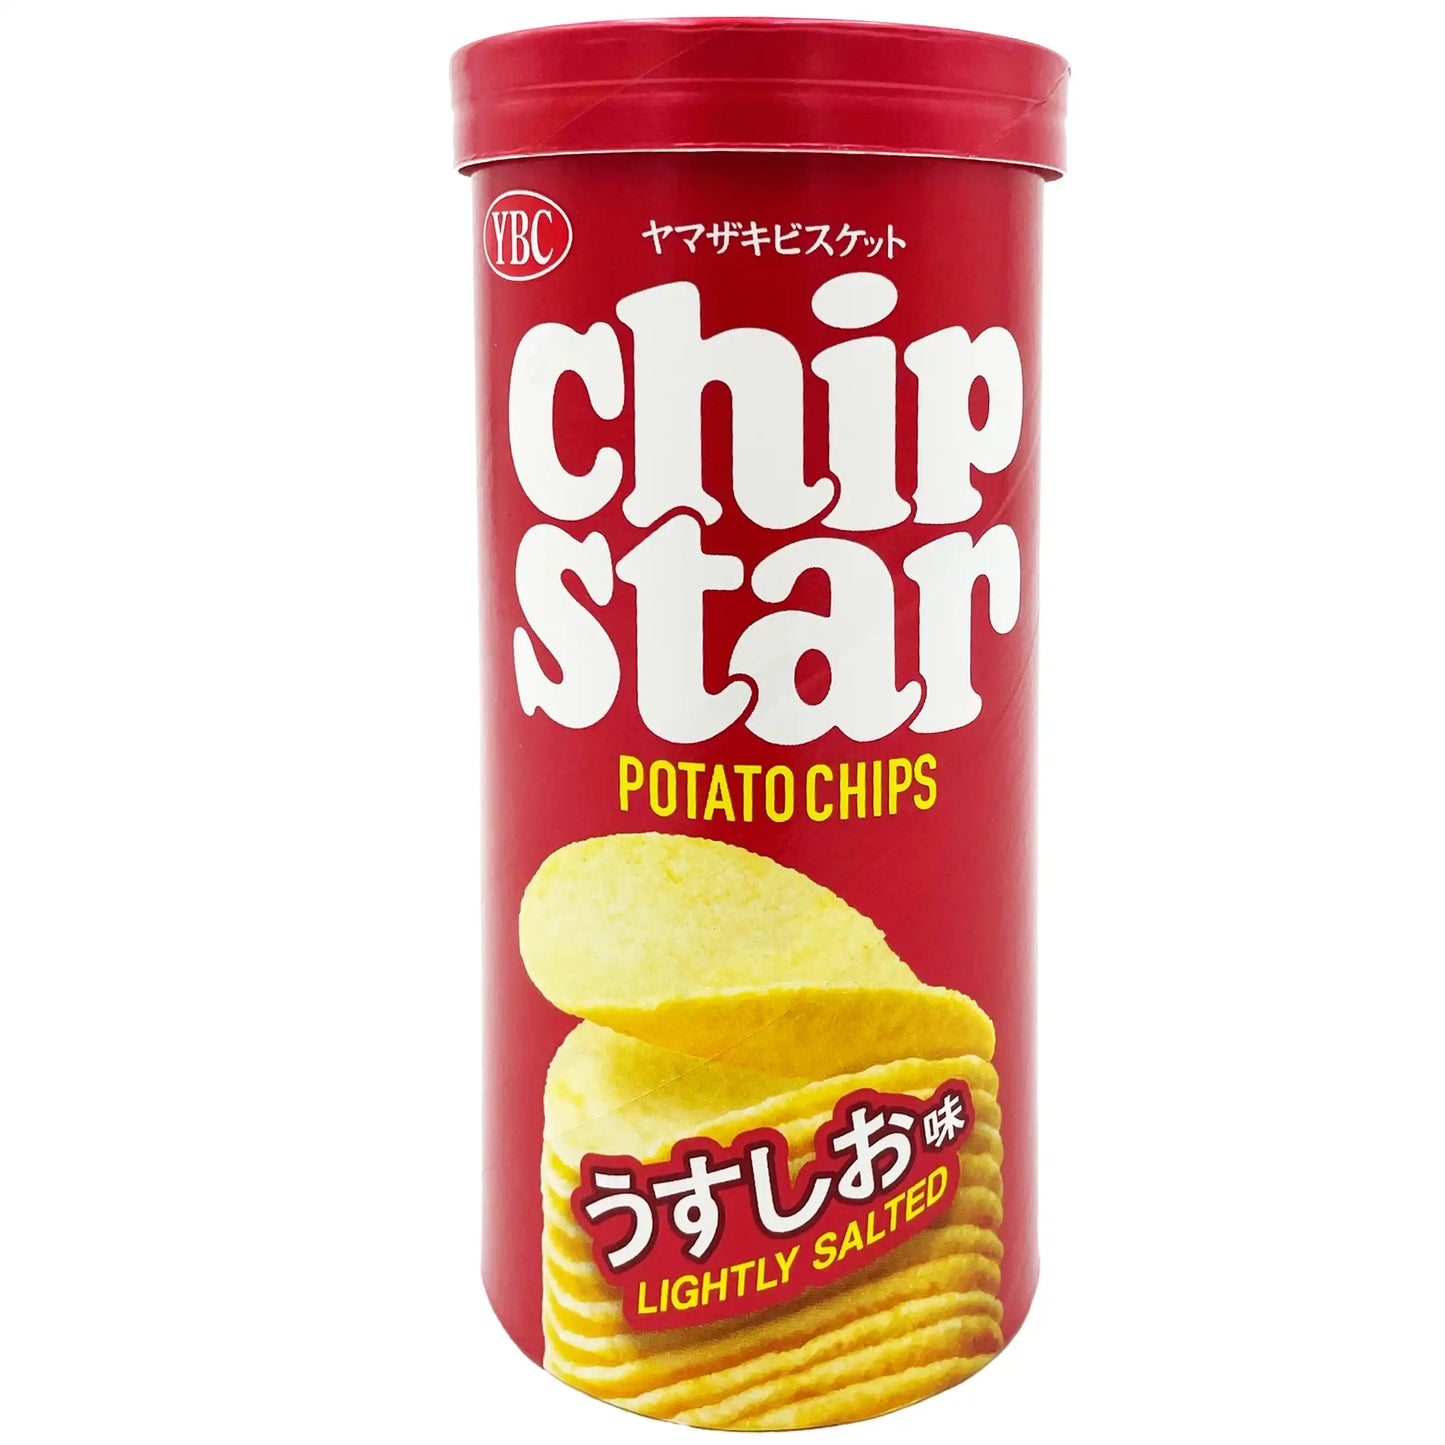 YBC Chip Star Potato Chips, Lightly Salted Flavor 1.59 oz